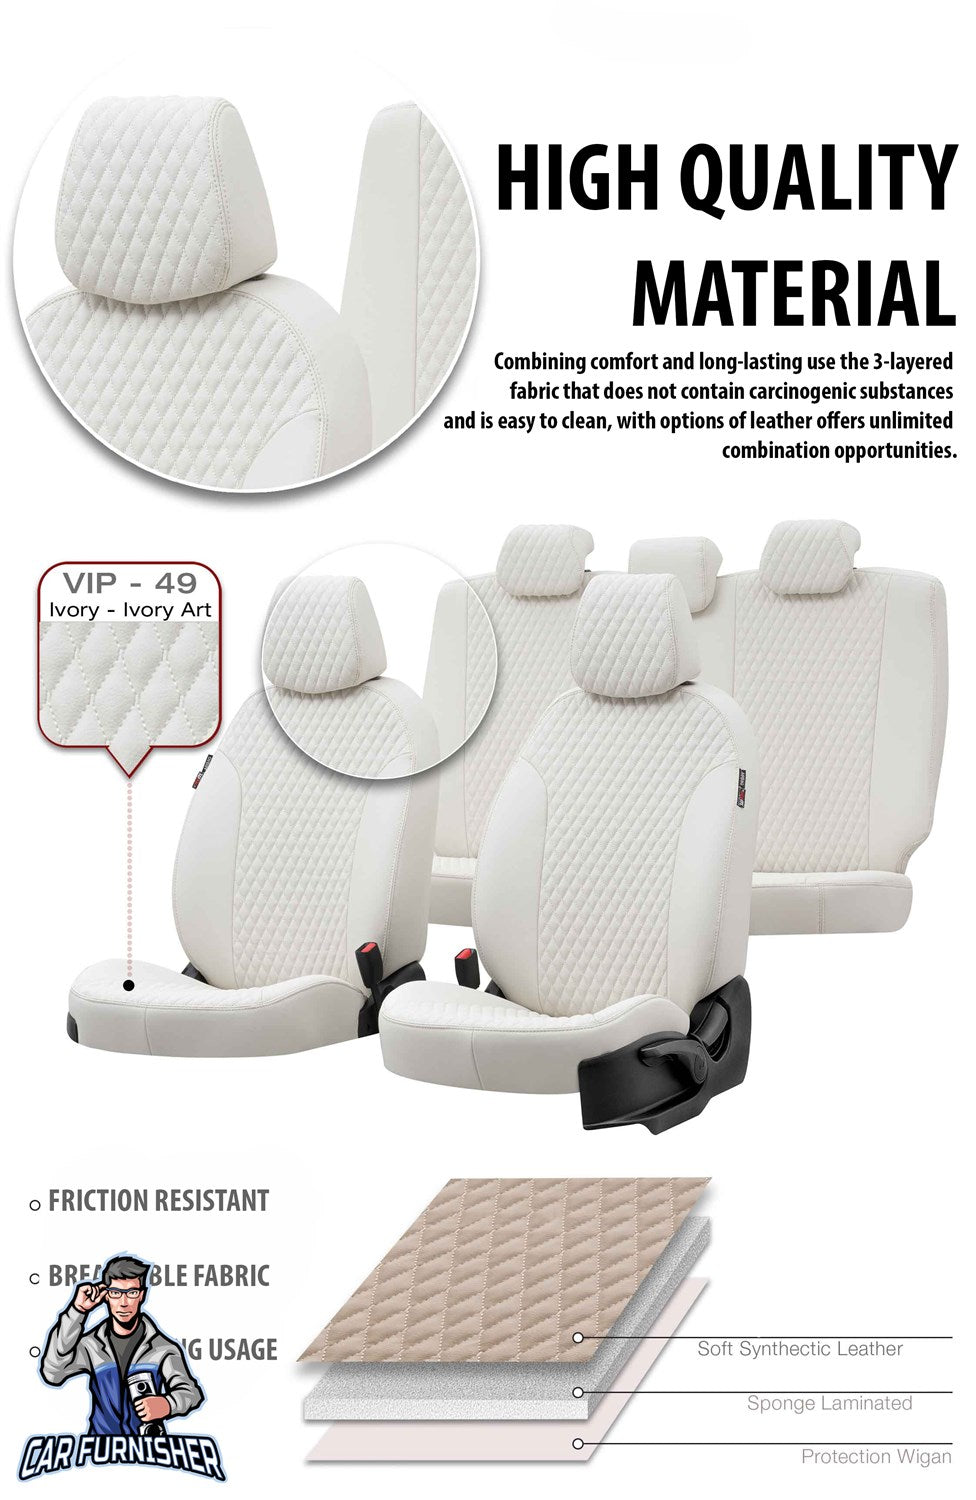 Mini Cooper Seat Covers Amsterdam Leather Design Beige Leather